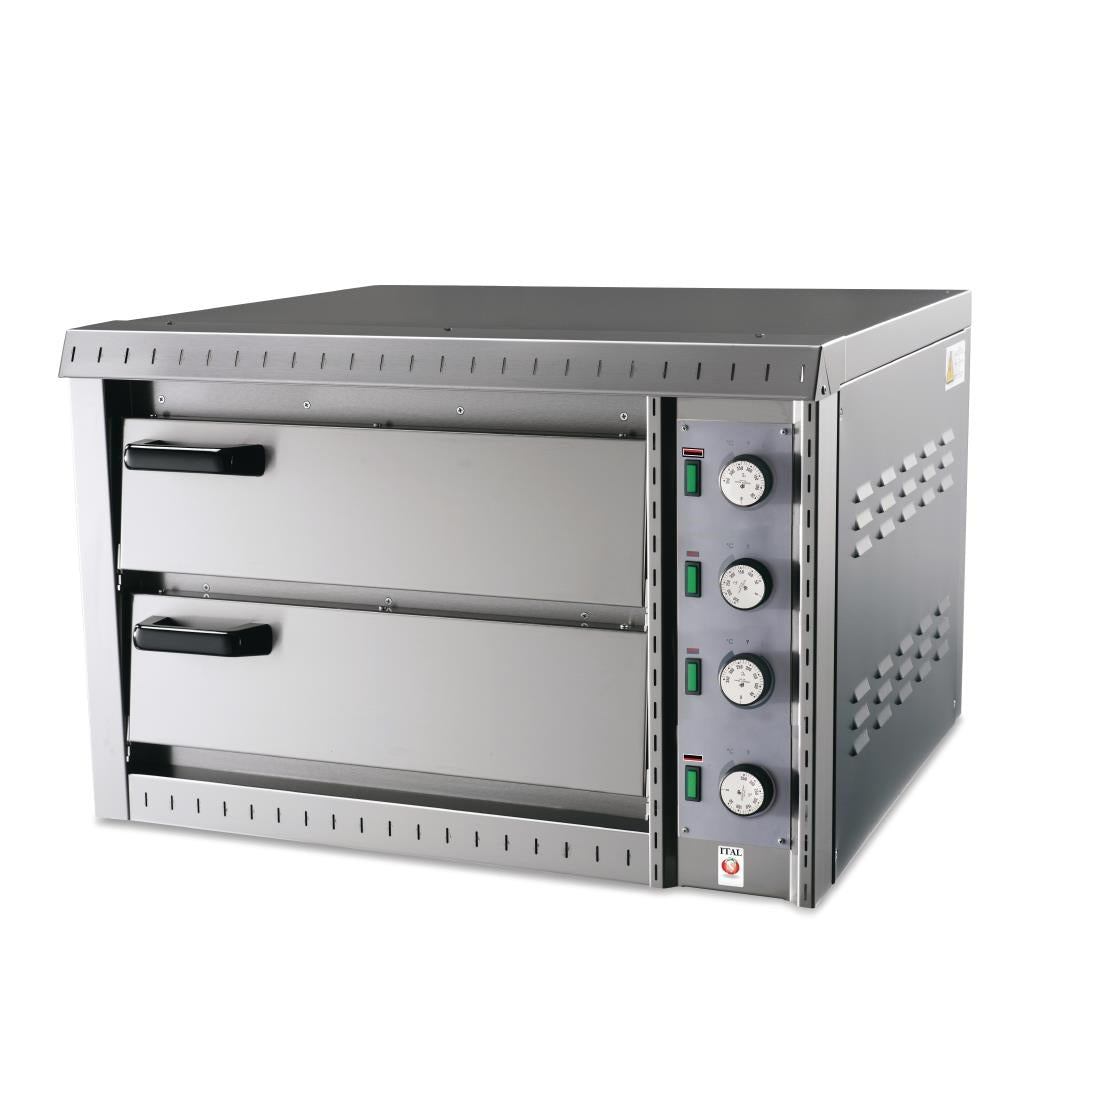 GK822 Sirman Vulcano Double Deck Pizza Oven JD Catering Equipment Solutions Ltd